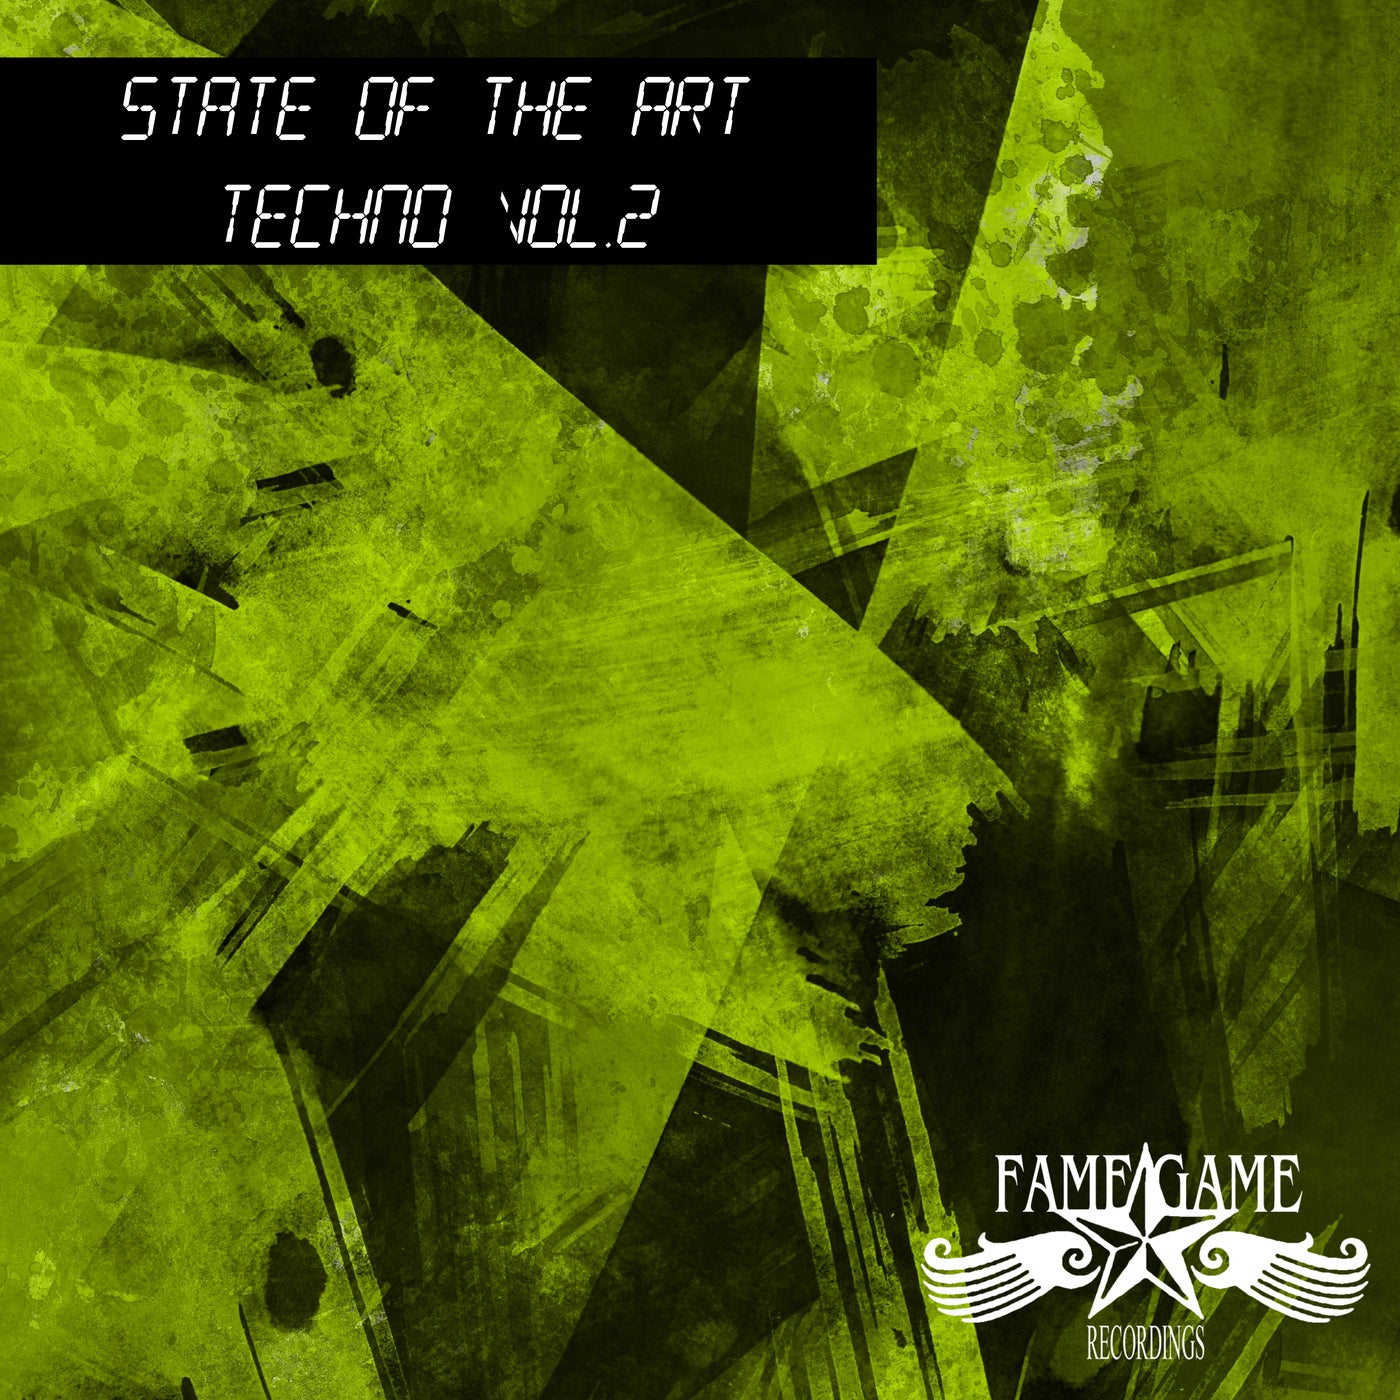 State of the Art Techno, Vol. 2